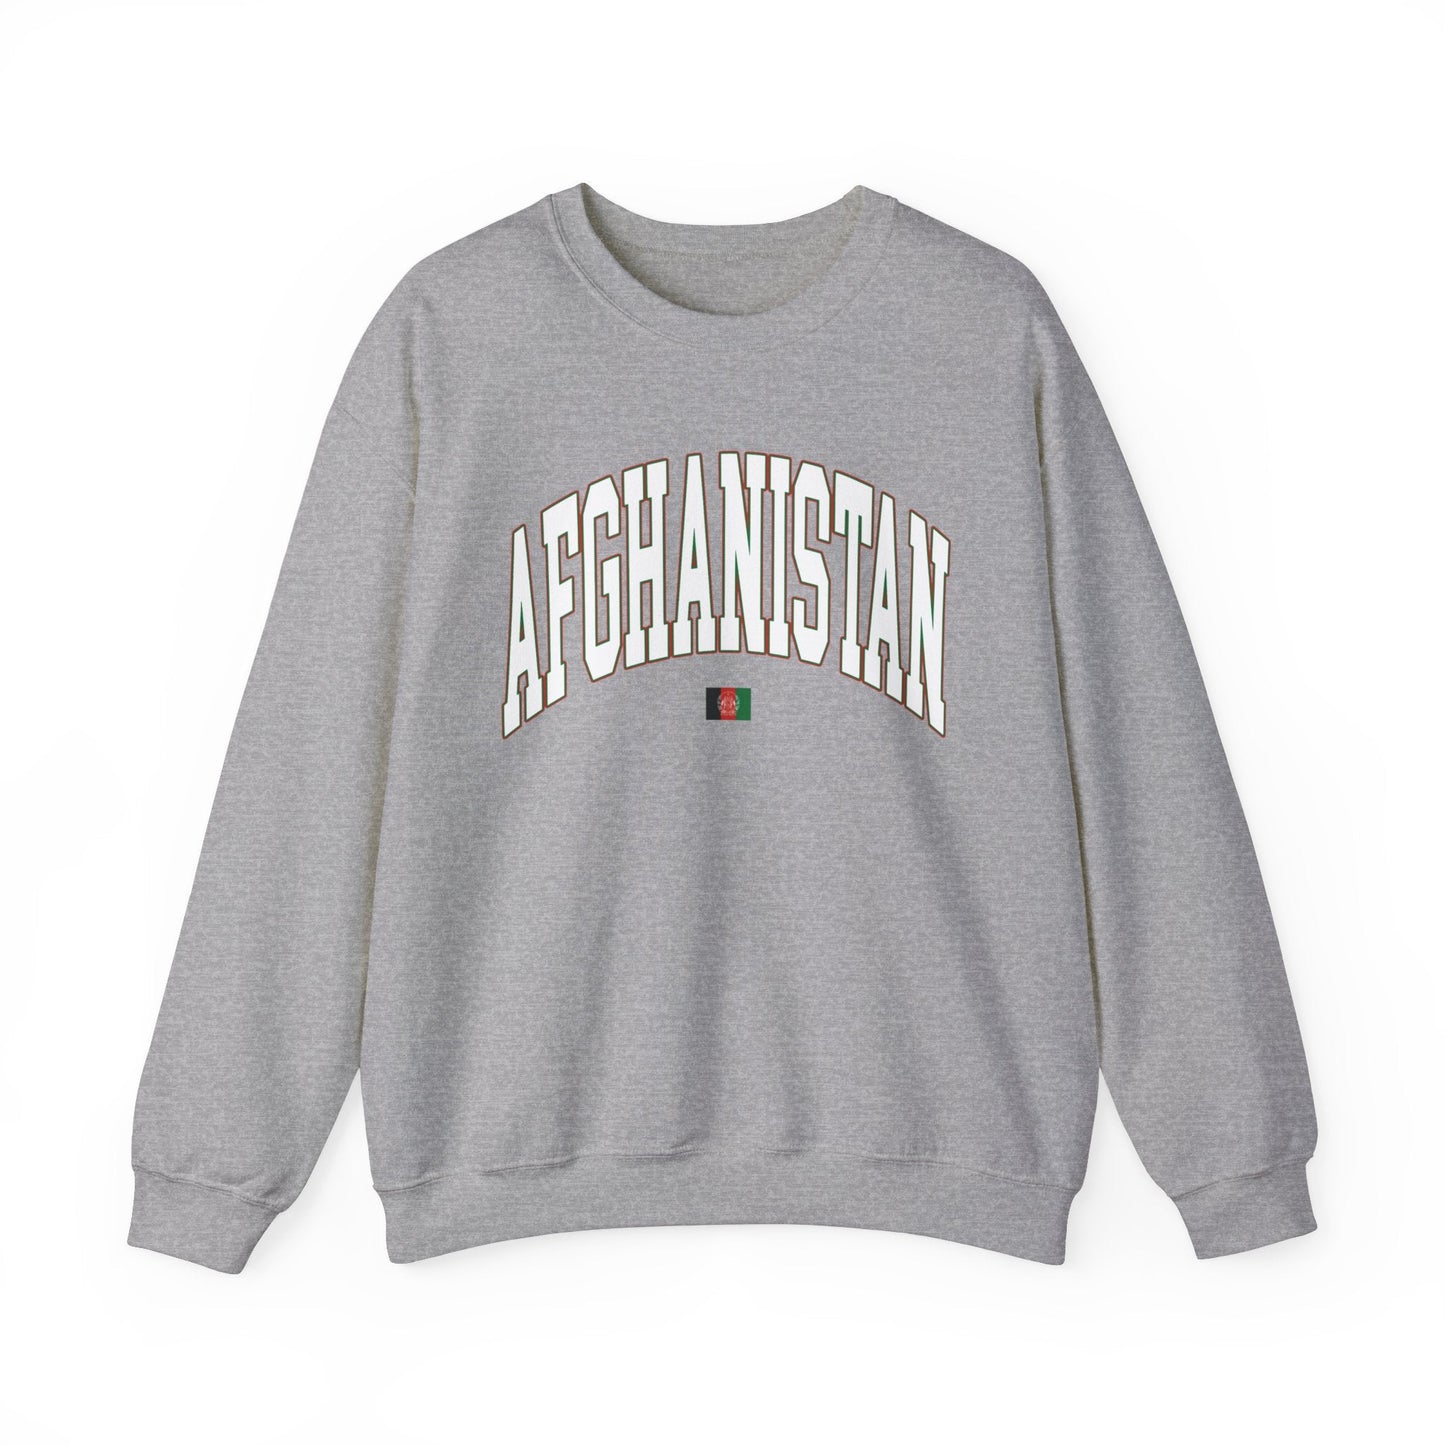 Toddler | Afghanistan | Crewneck Sweatshirt